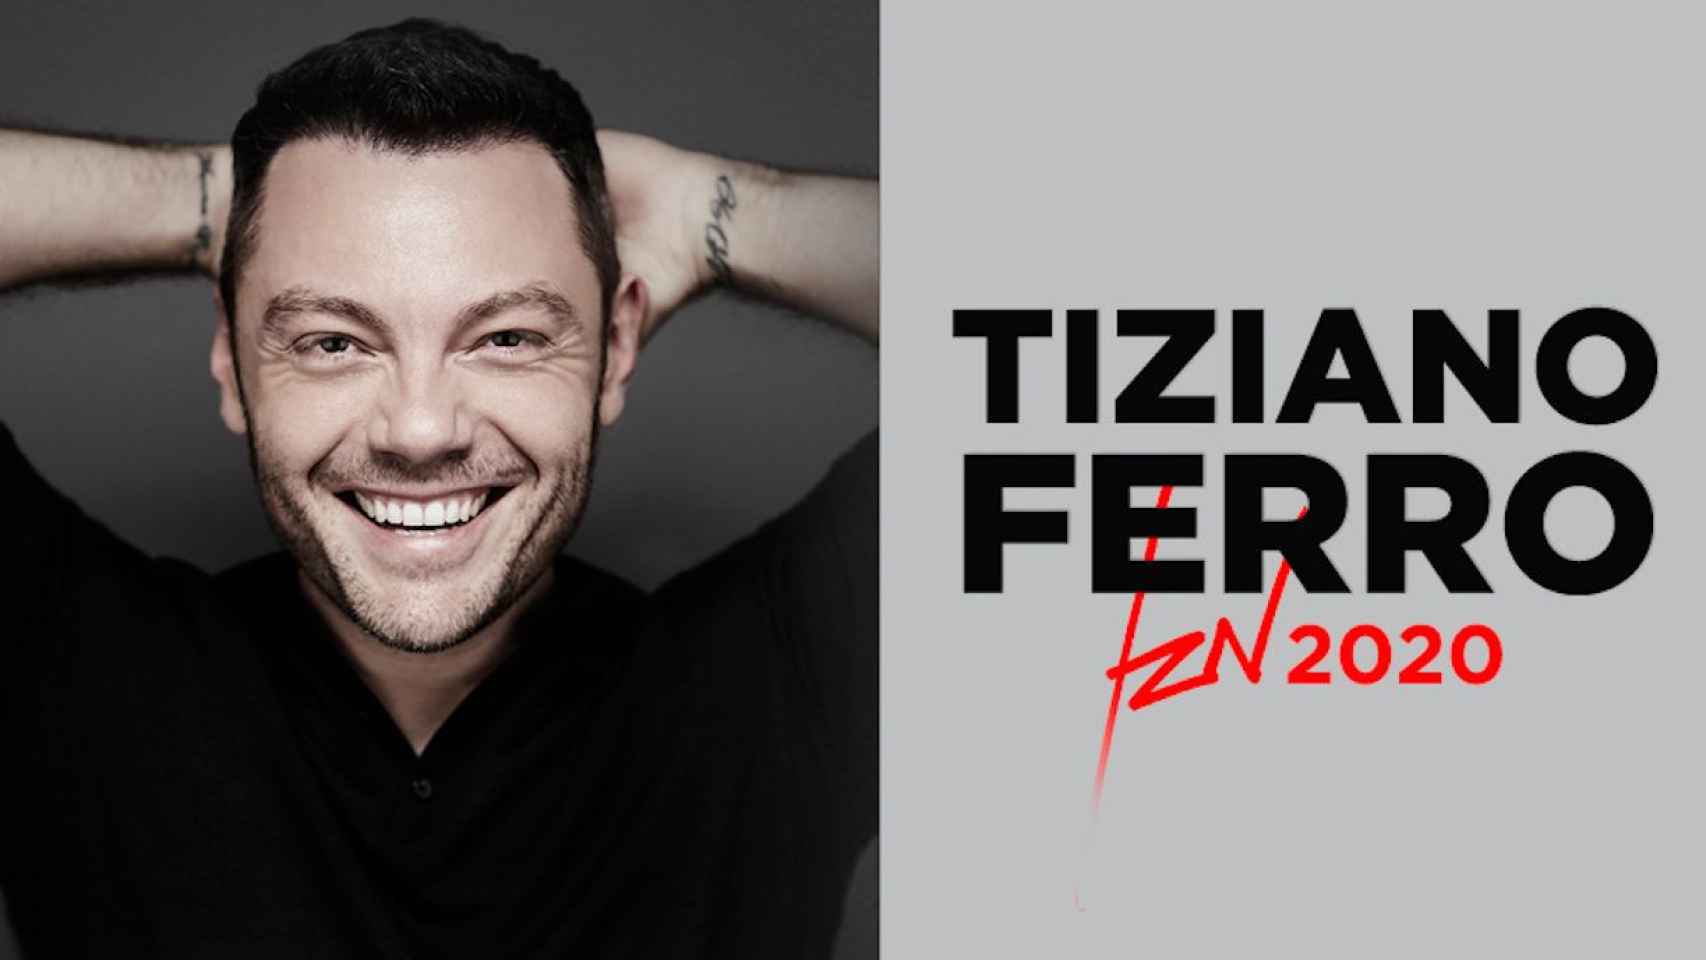 Cartel promocional de la nueva gira de Tiziano Ferro, que llega a Barcelona el próximo 13 de diciembre